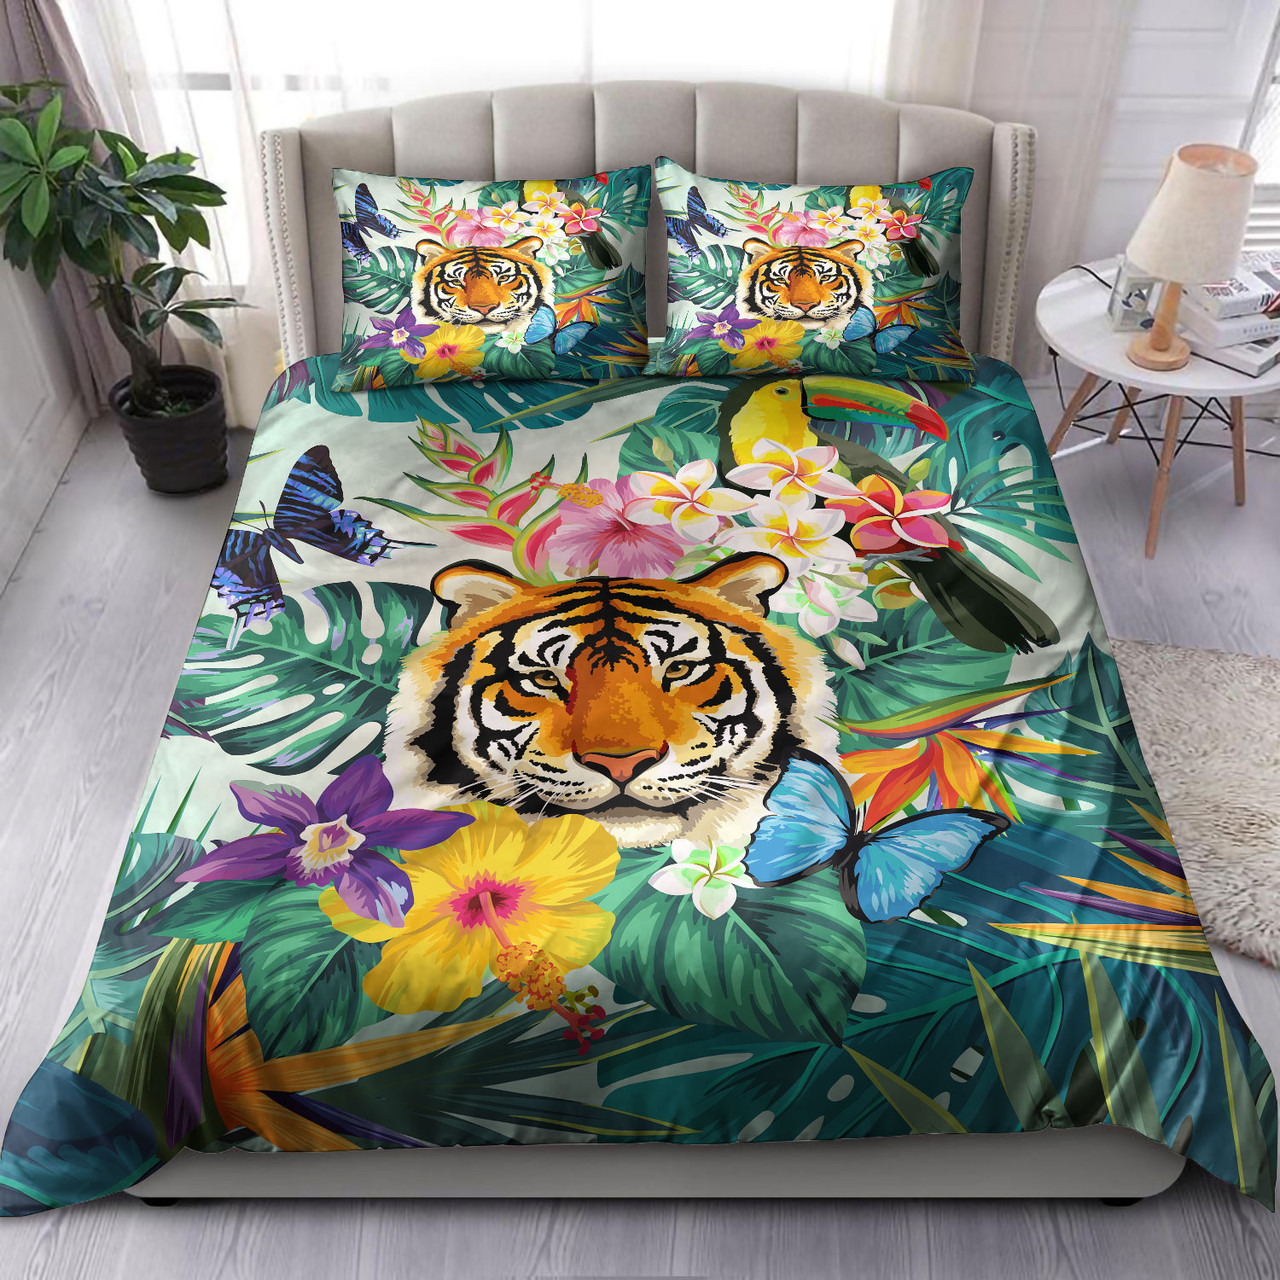 Polynesian Bedding Set - Tiger Tropical Life Summer Vibes Bedding Set